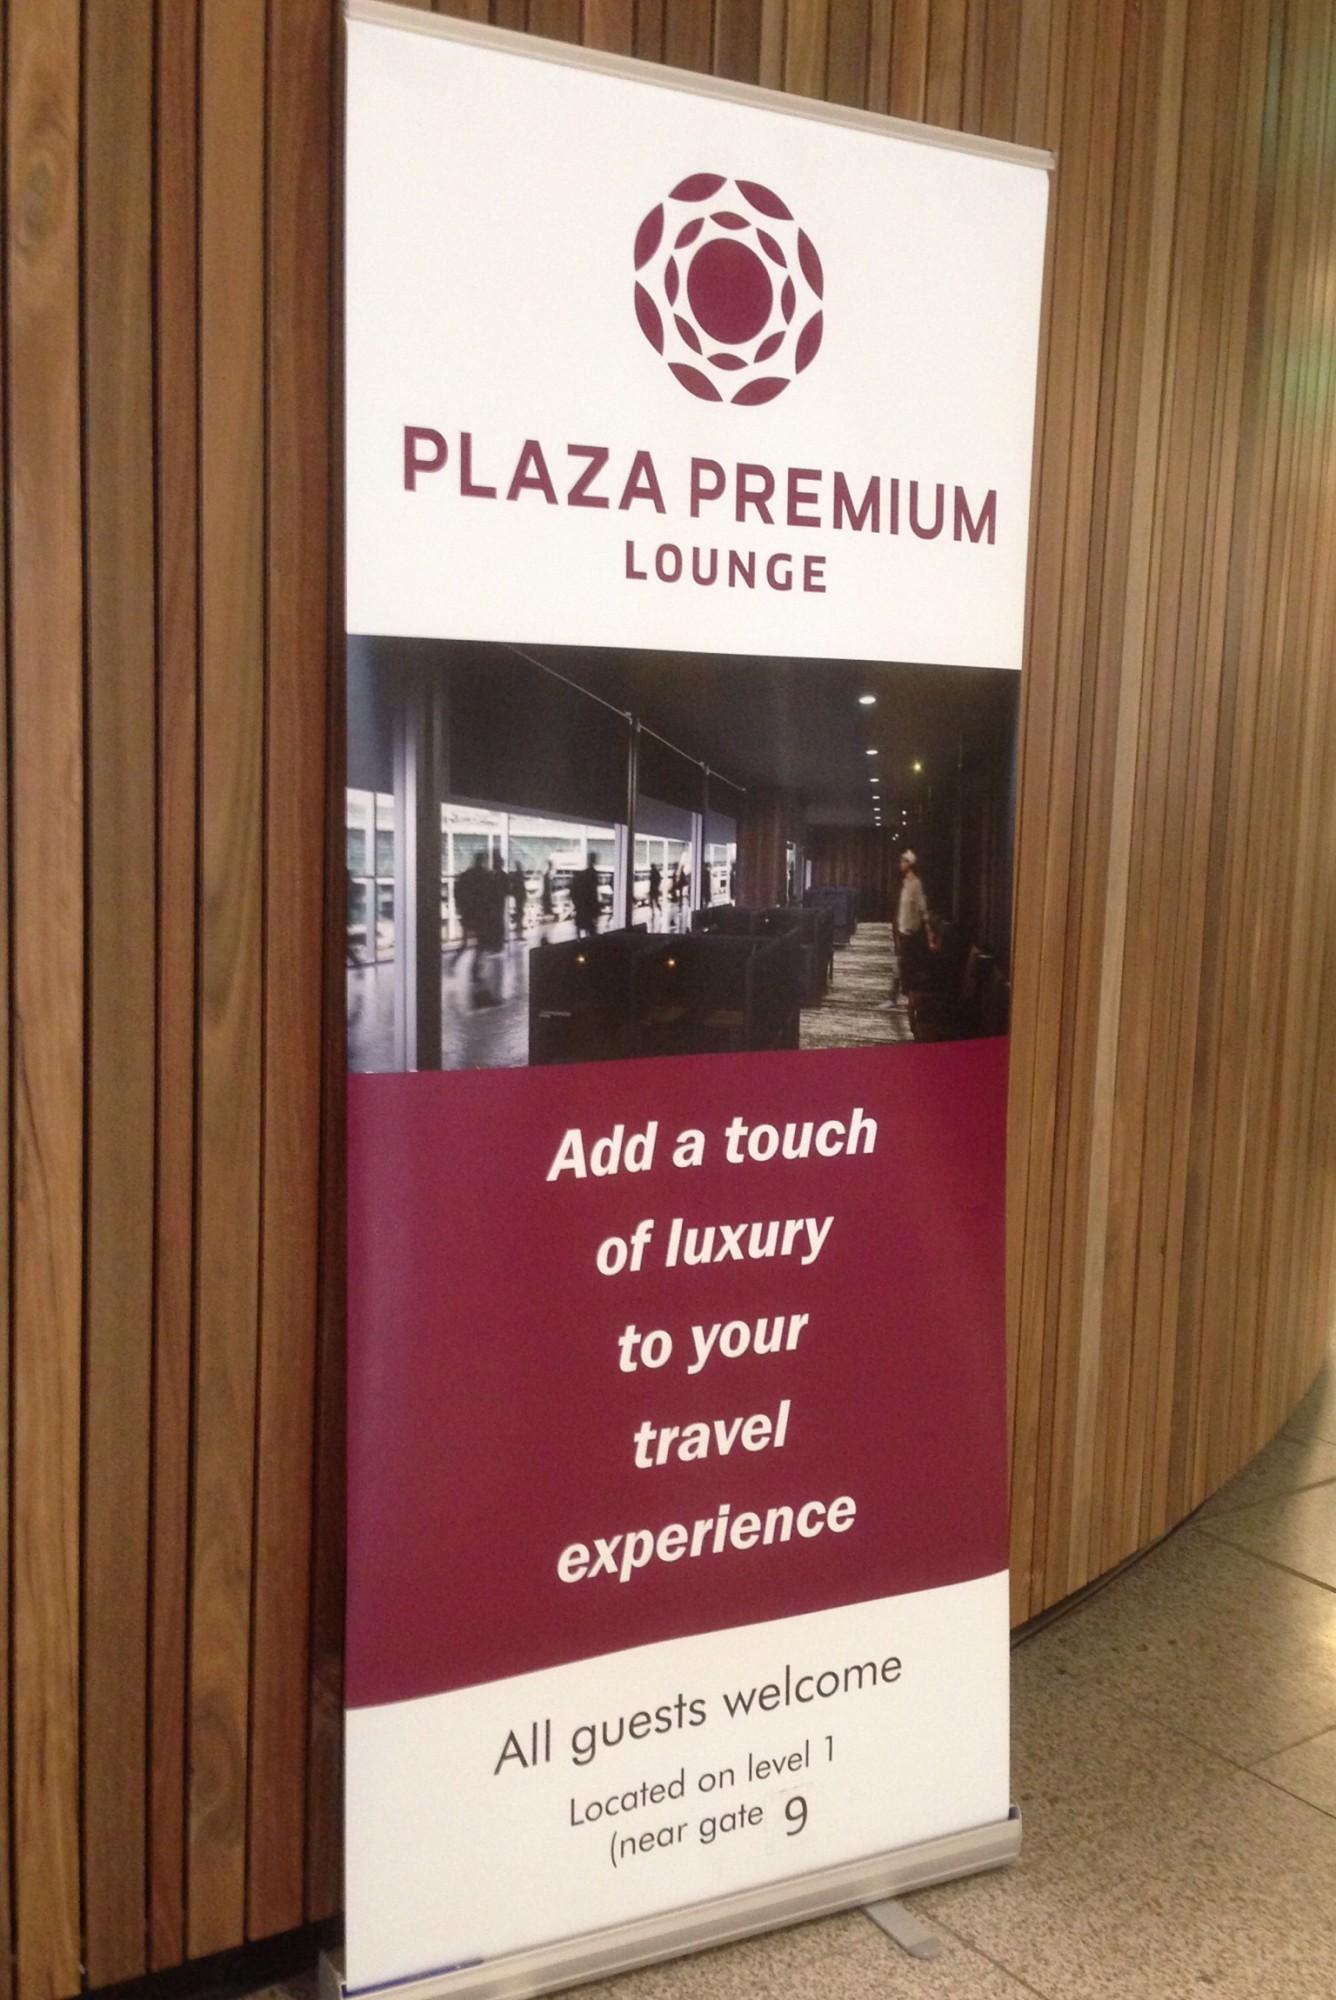 Plaza Premium Lounge image 7 of 33